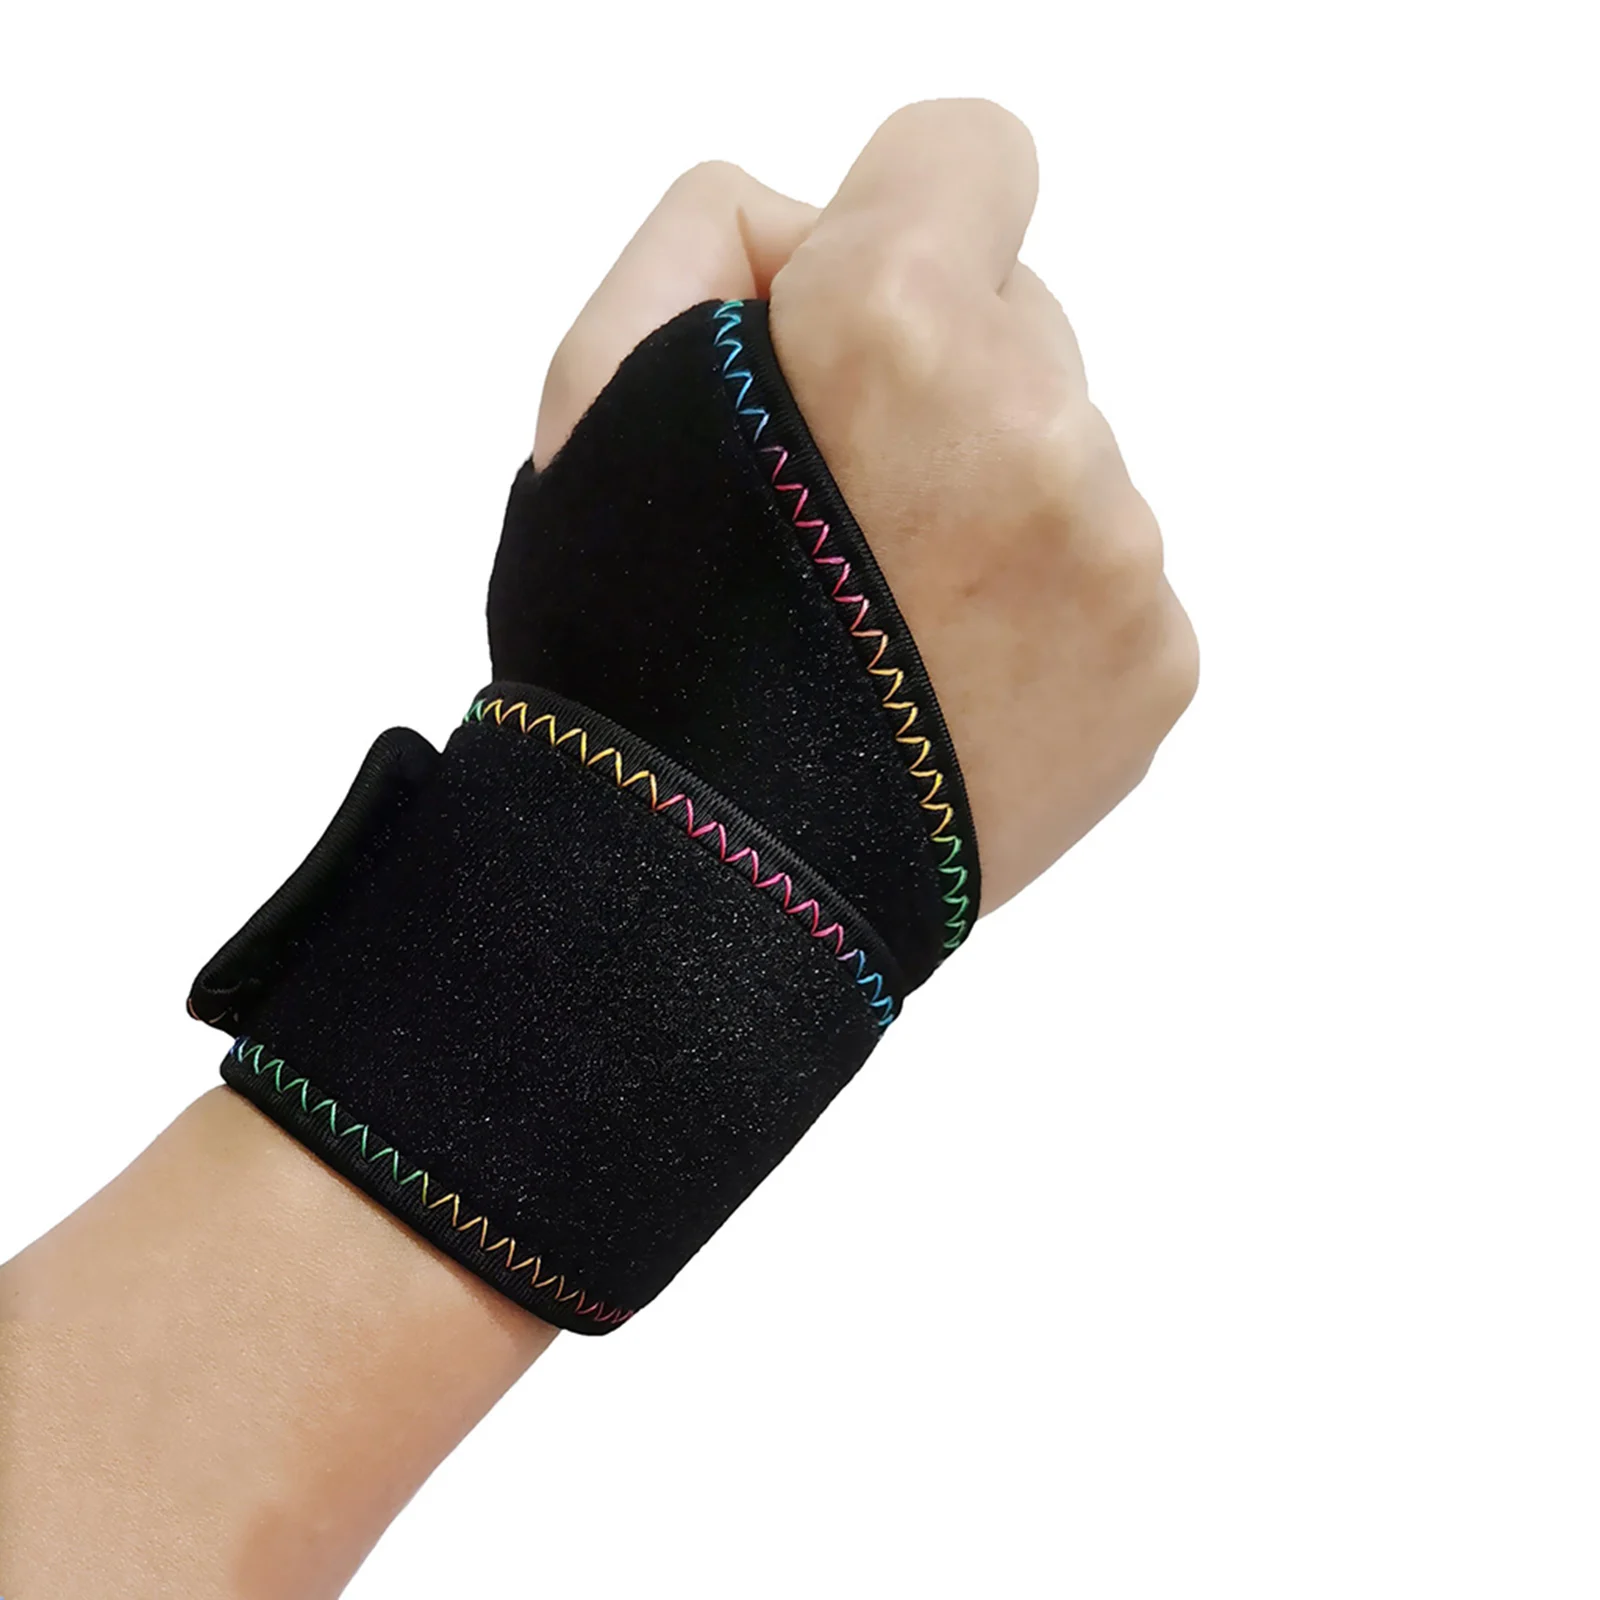 Wrist Brace for Adjustable Wrist Support Brace for Support for Women Men